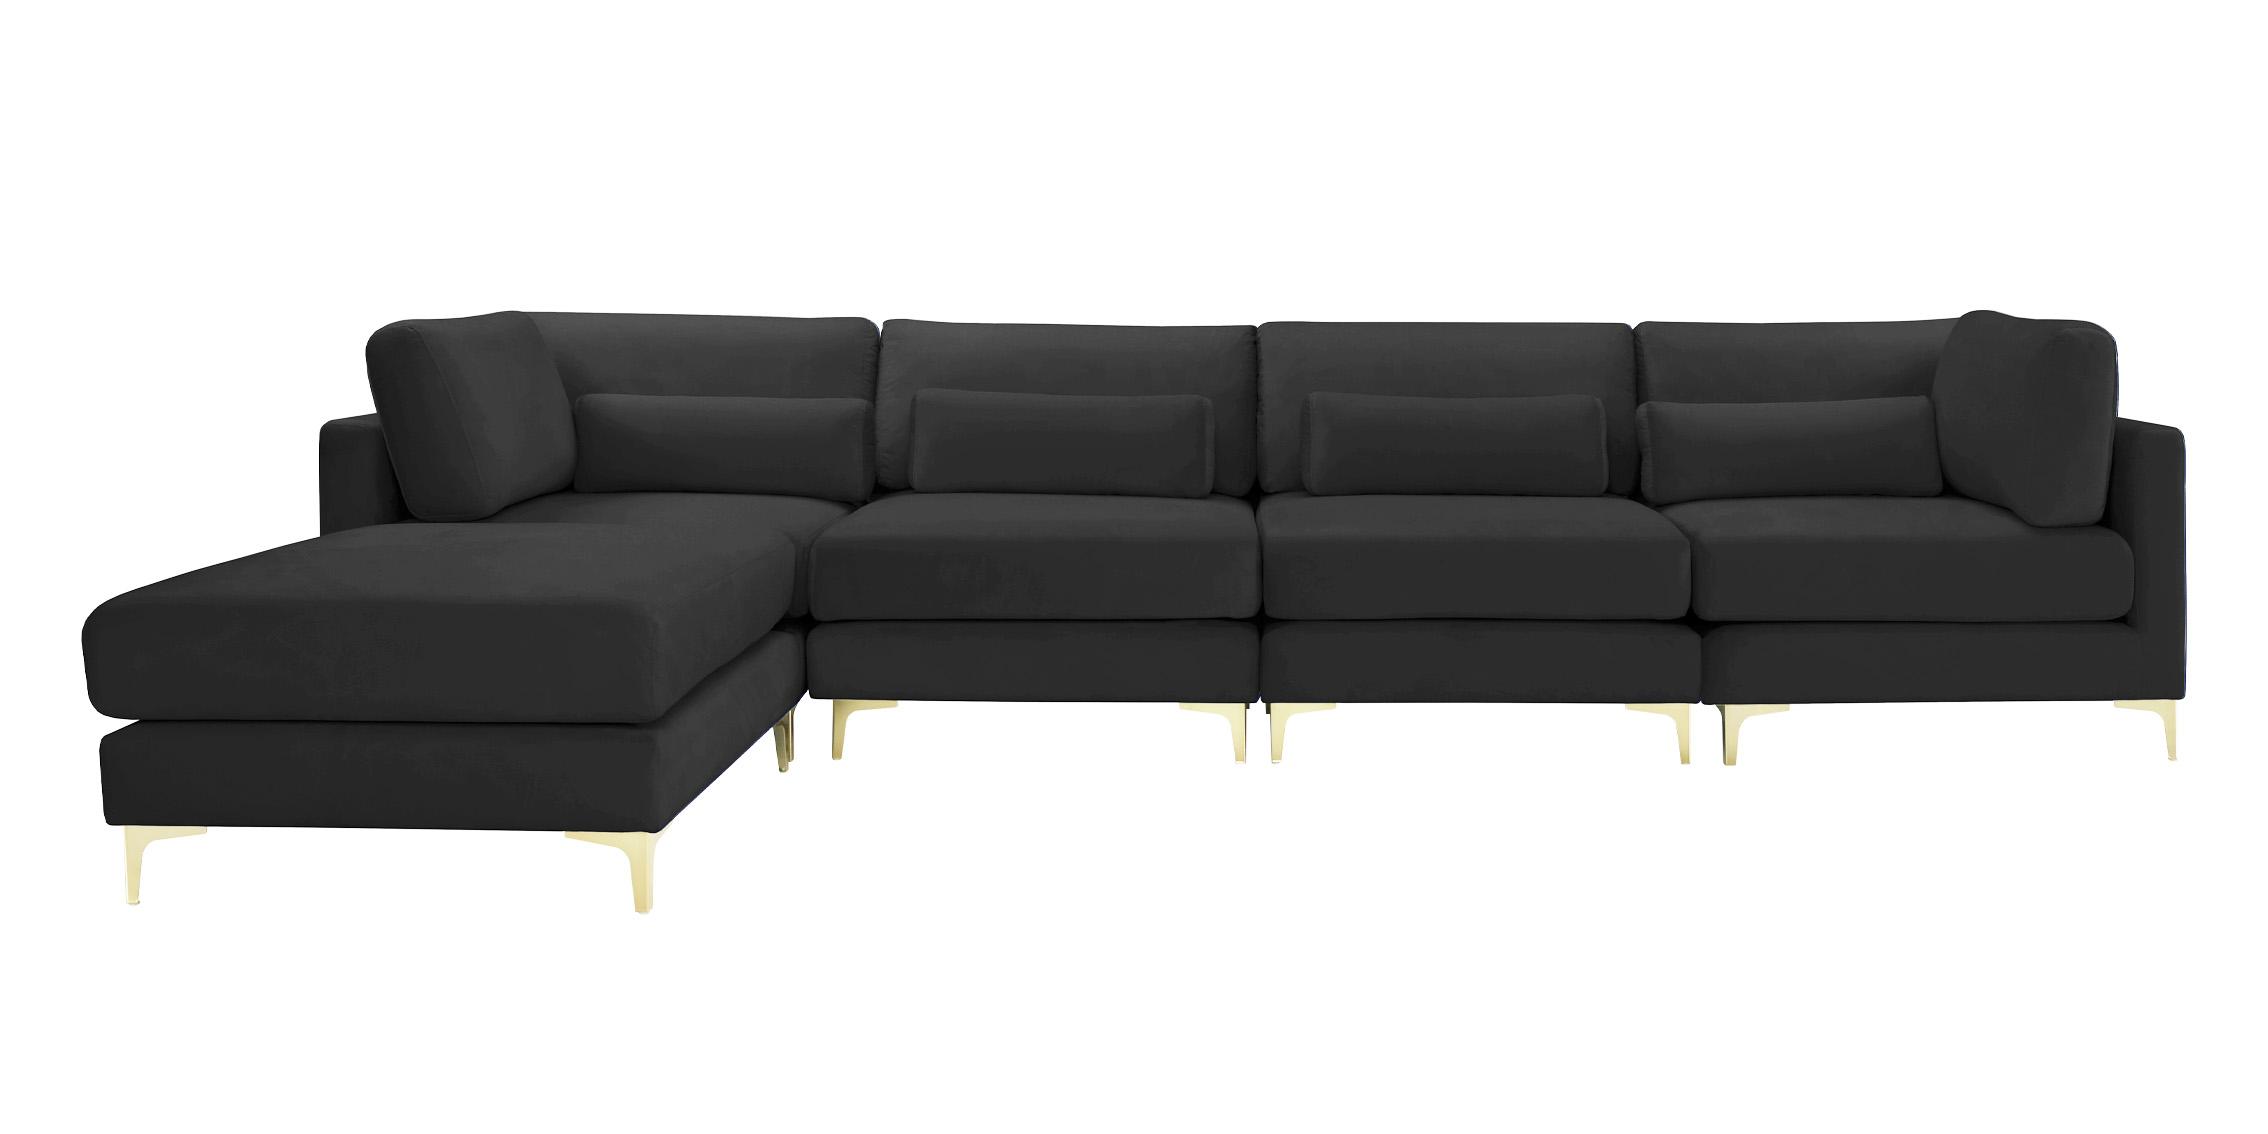 

    
Meridian Furniture JULIA 605Black-Sec5A Modular Sectional Sofa Black 605Black-Sec5A
